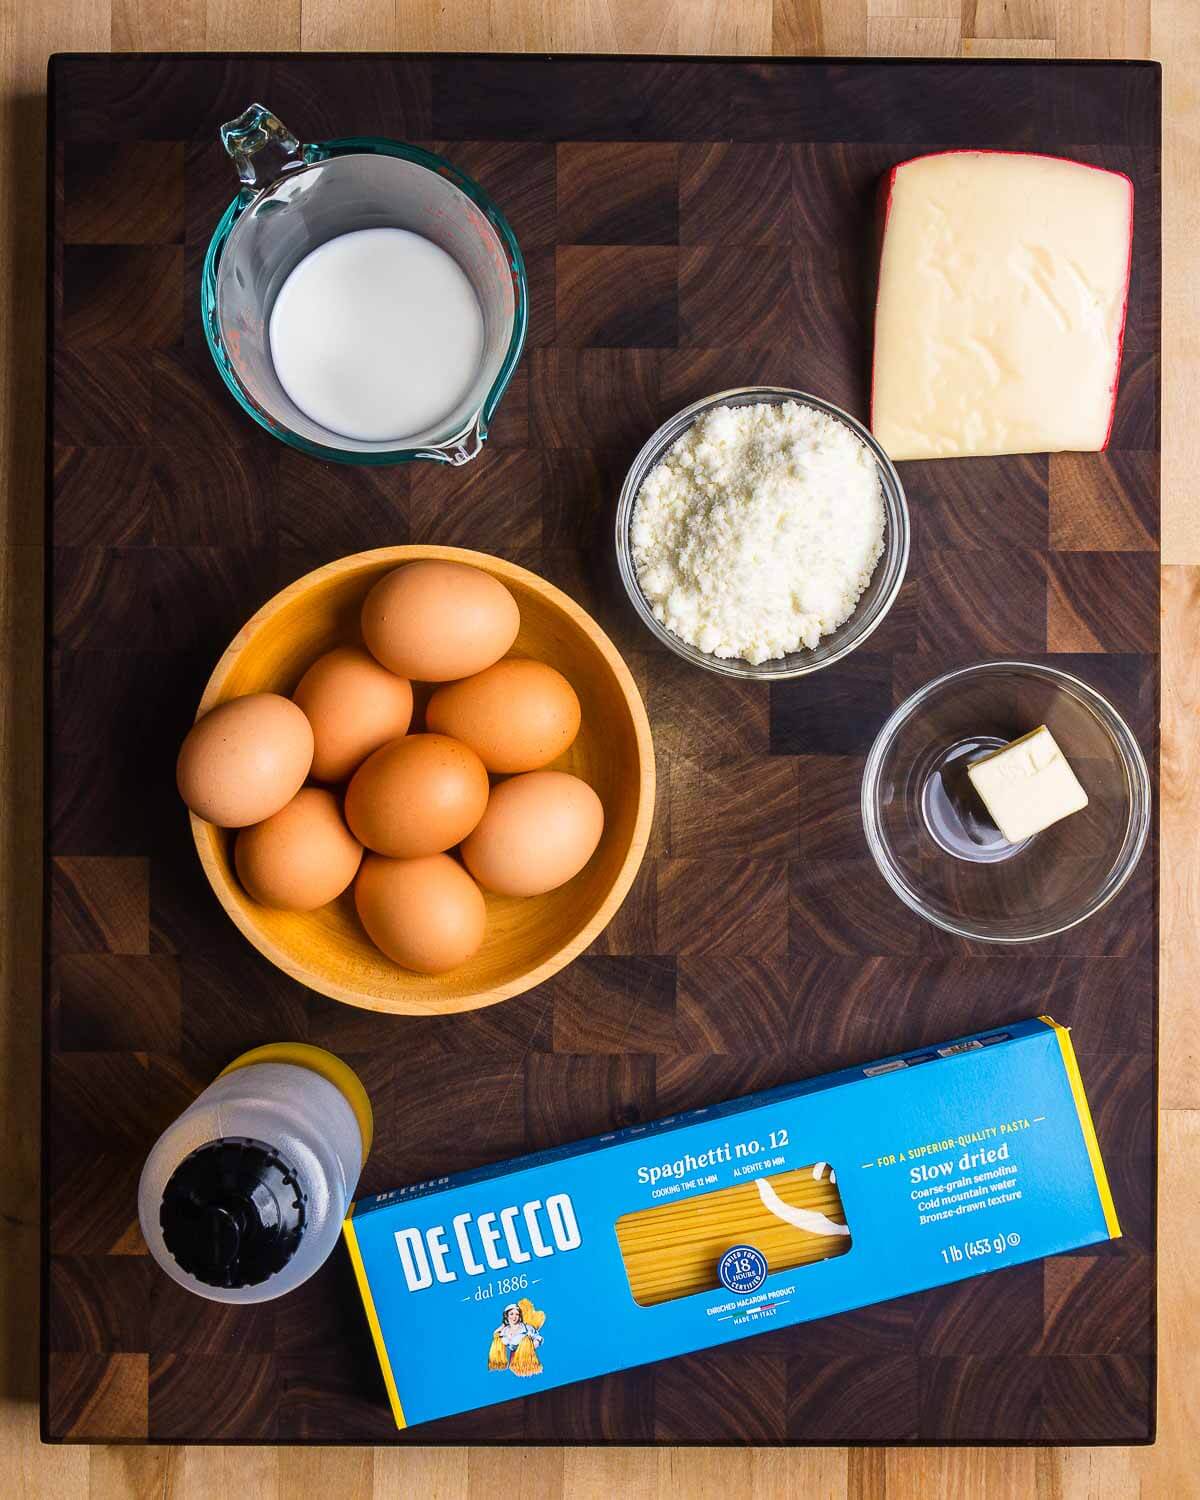 Ingredients shown: milk, fontina cheese, Pecorino Romano, eggs, butter, olive oil, and spaghetti.